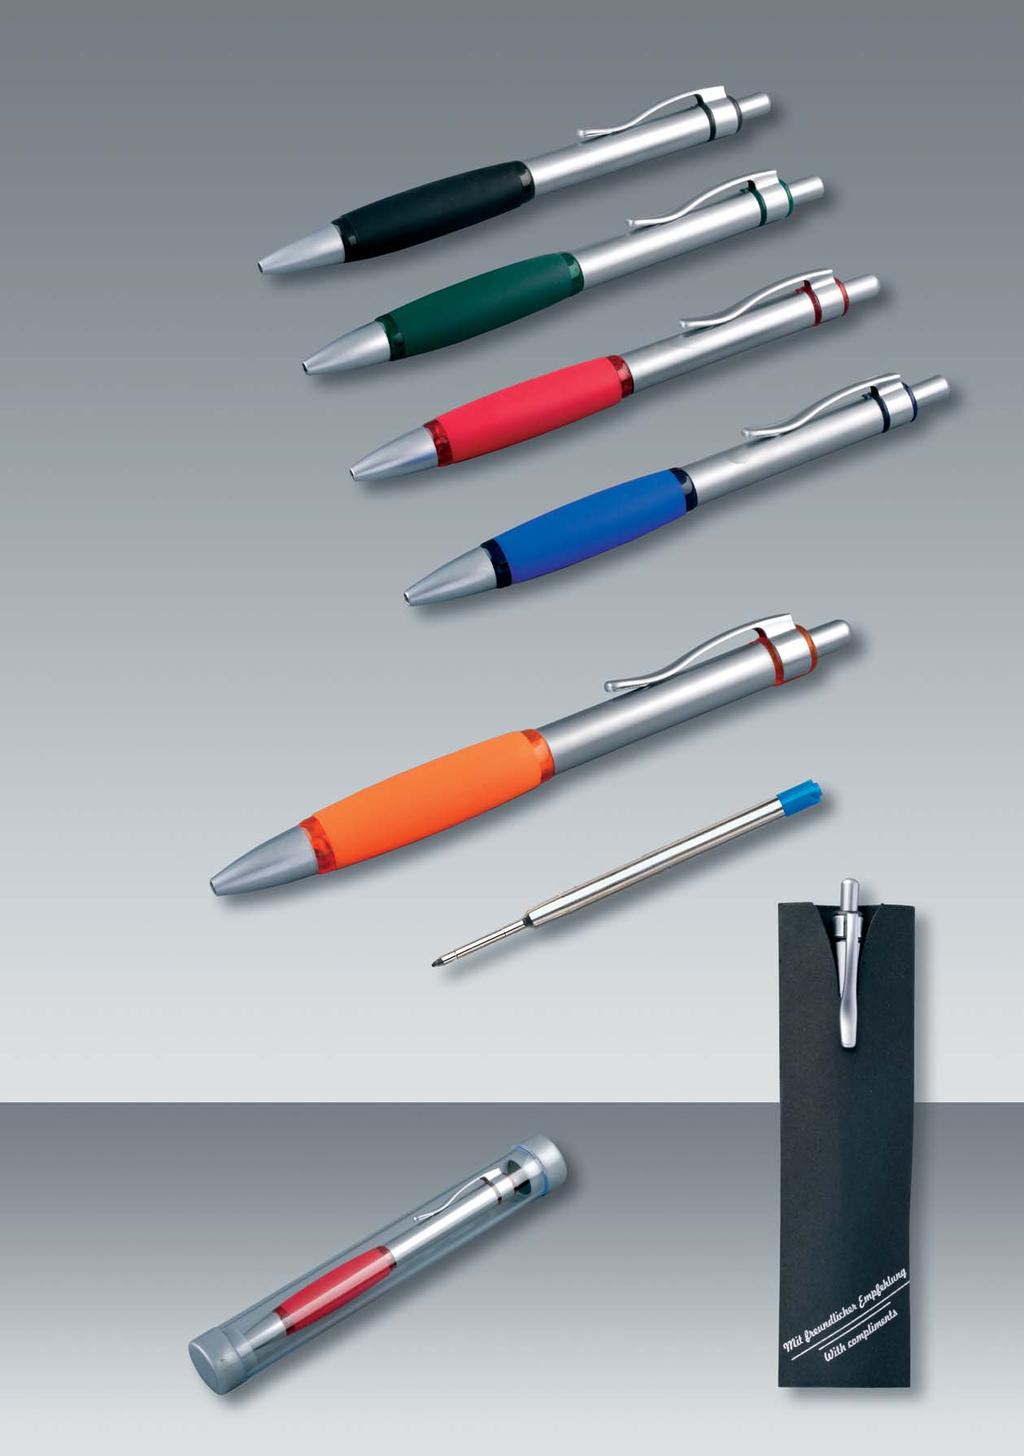 Metal pens Article 248: metal ball pen, colored grip in blue, black, red, green or orange, int. metal refill, blue ink.